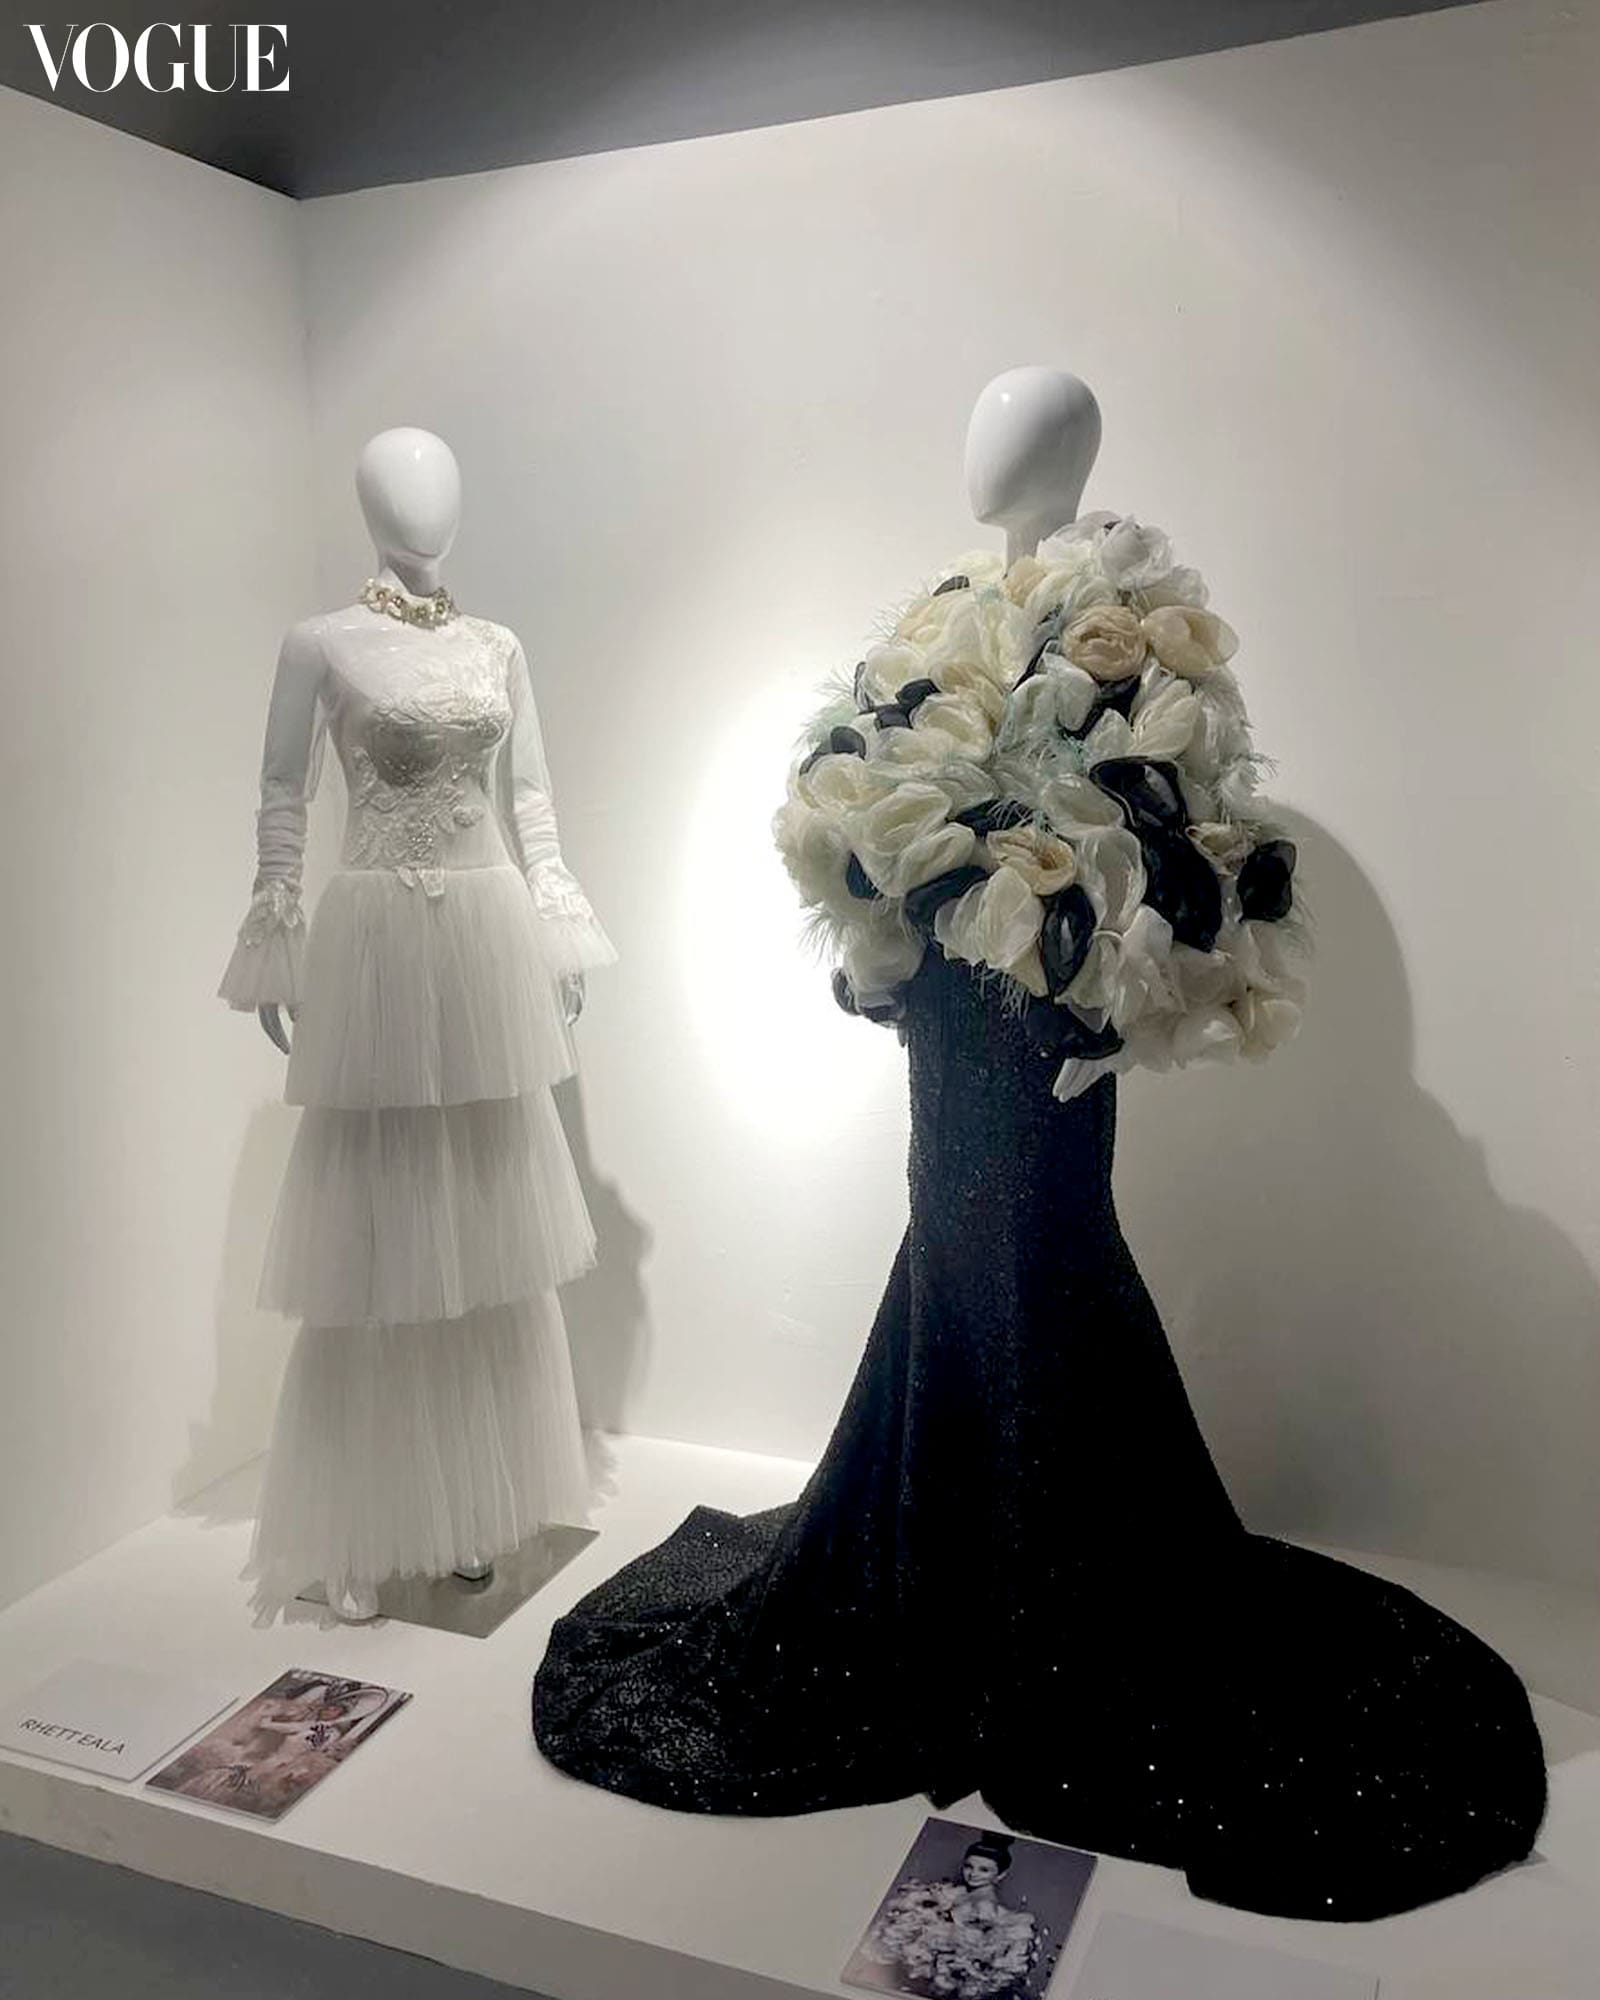 An Audrey Hepburn-inspired dress by Rhett Eala and Puey Quiñones